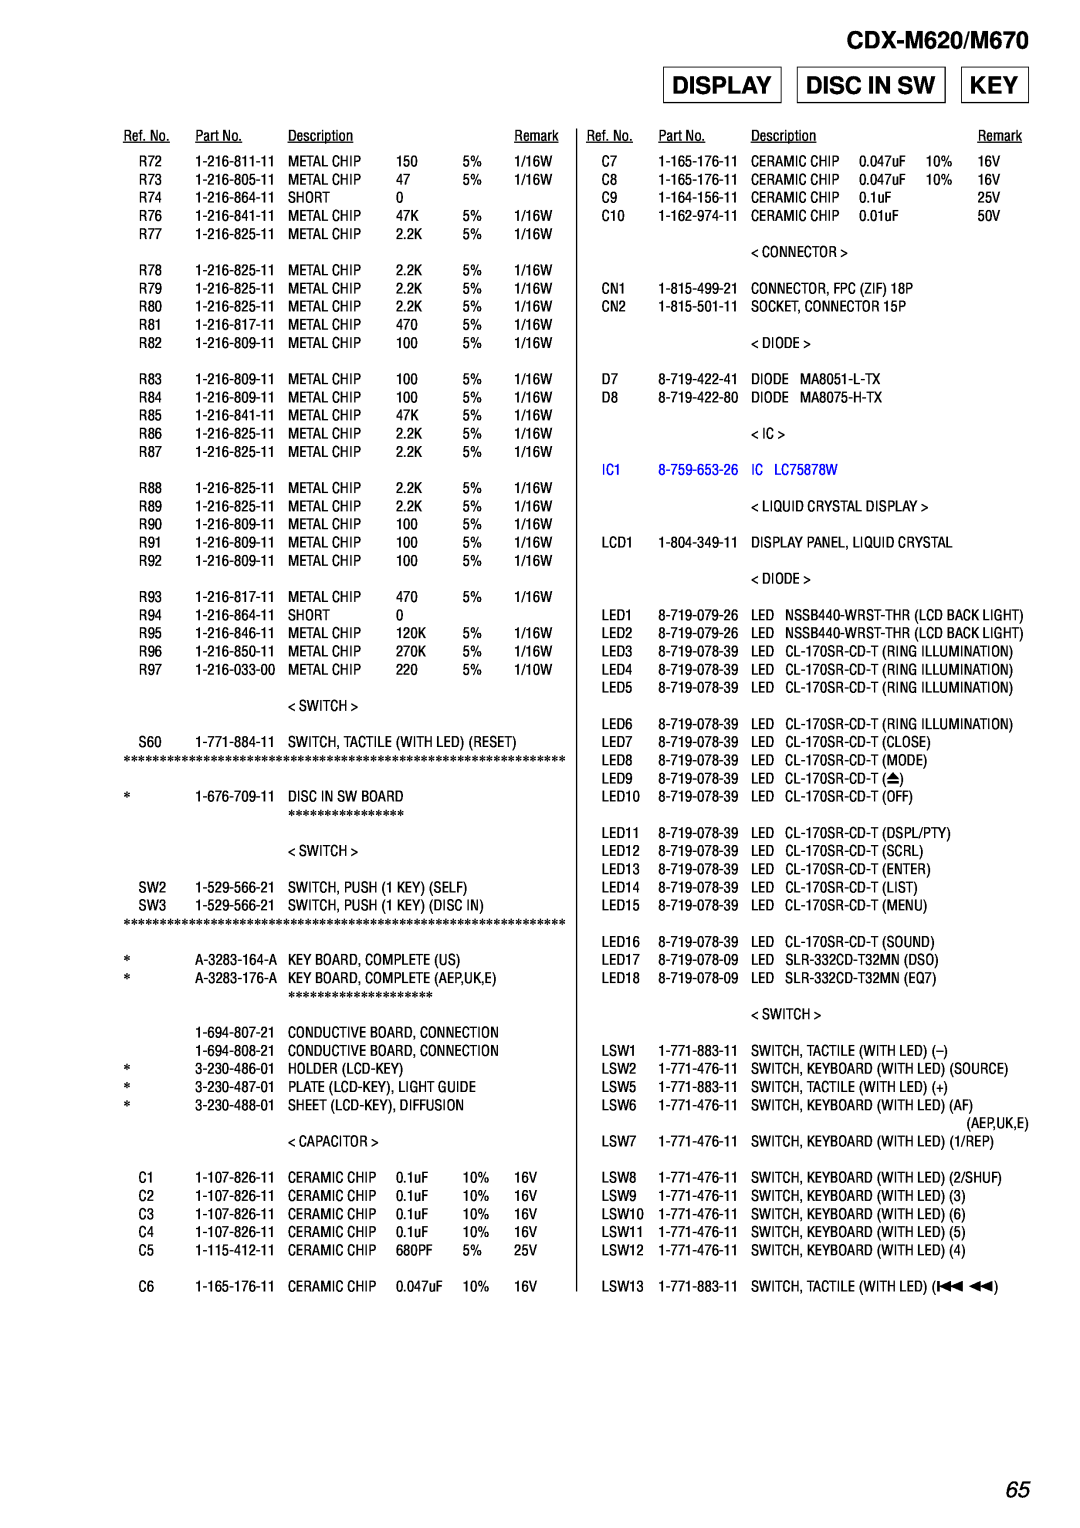 Sony Ericsson service manual CDX-M620/M670 DISPLAY DISC IN SW KEY 